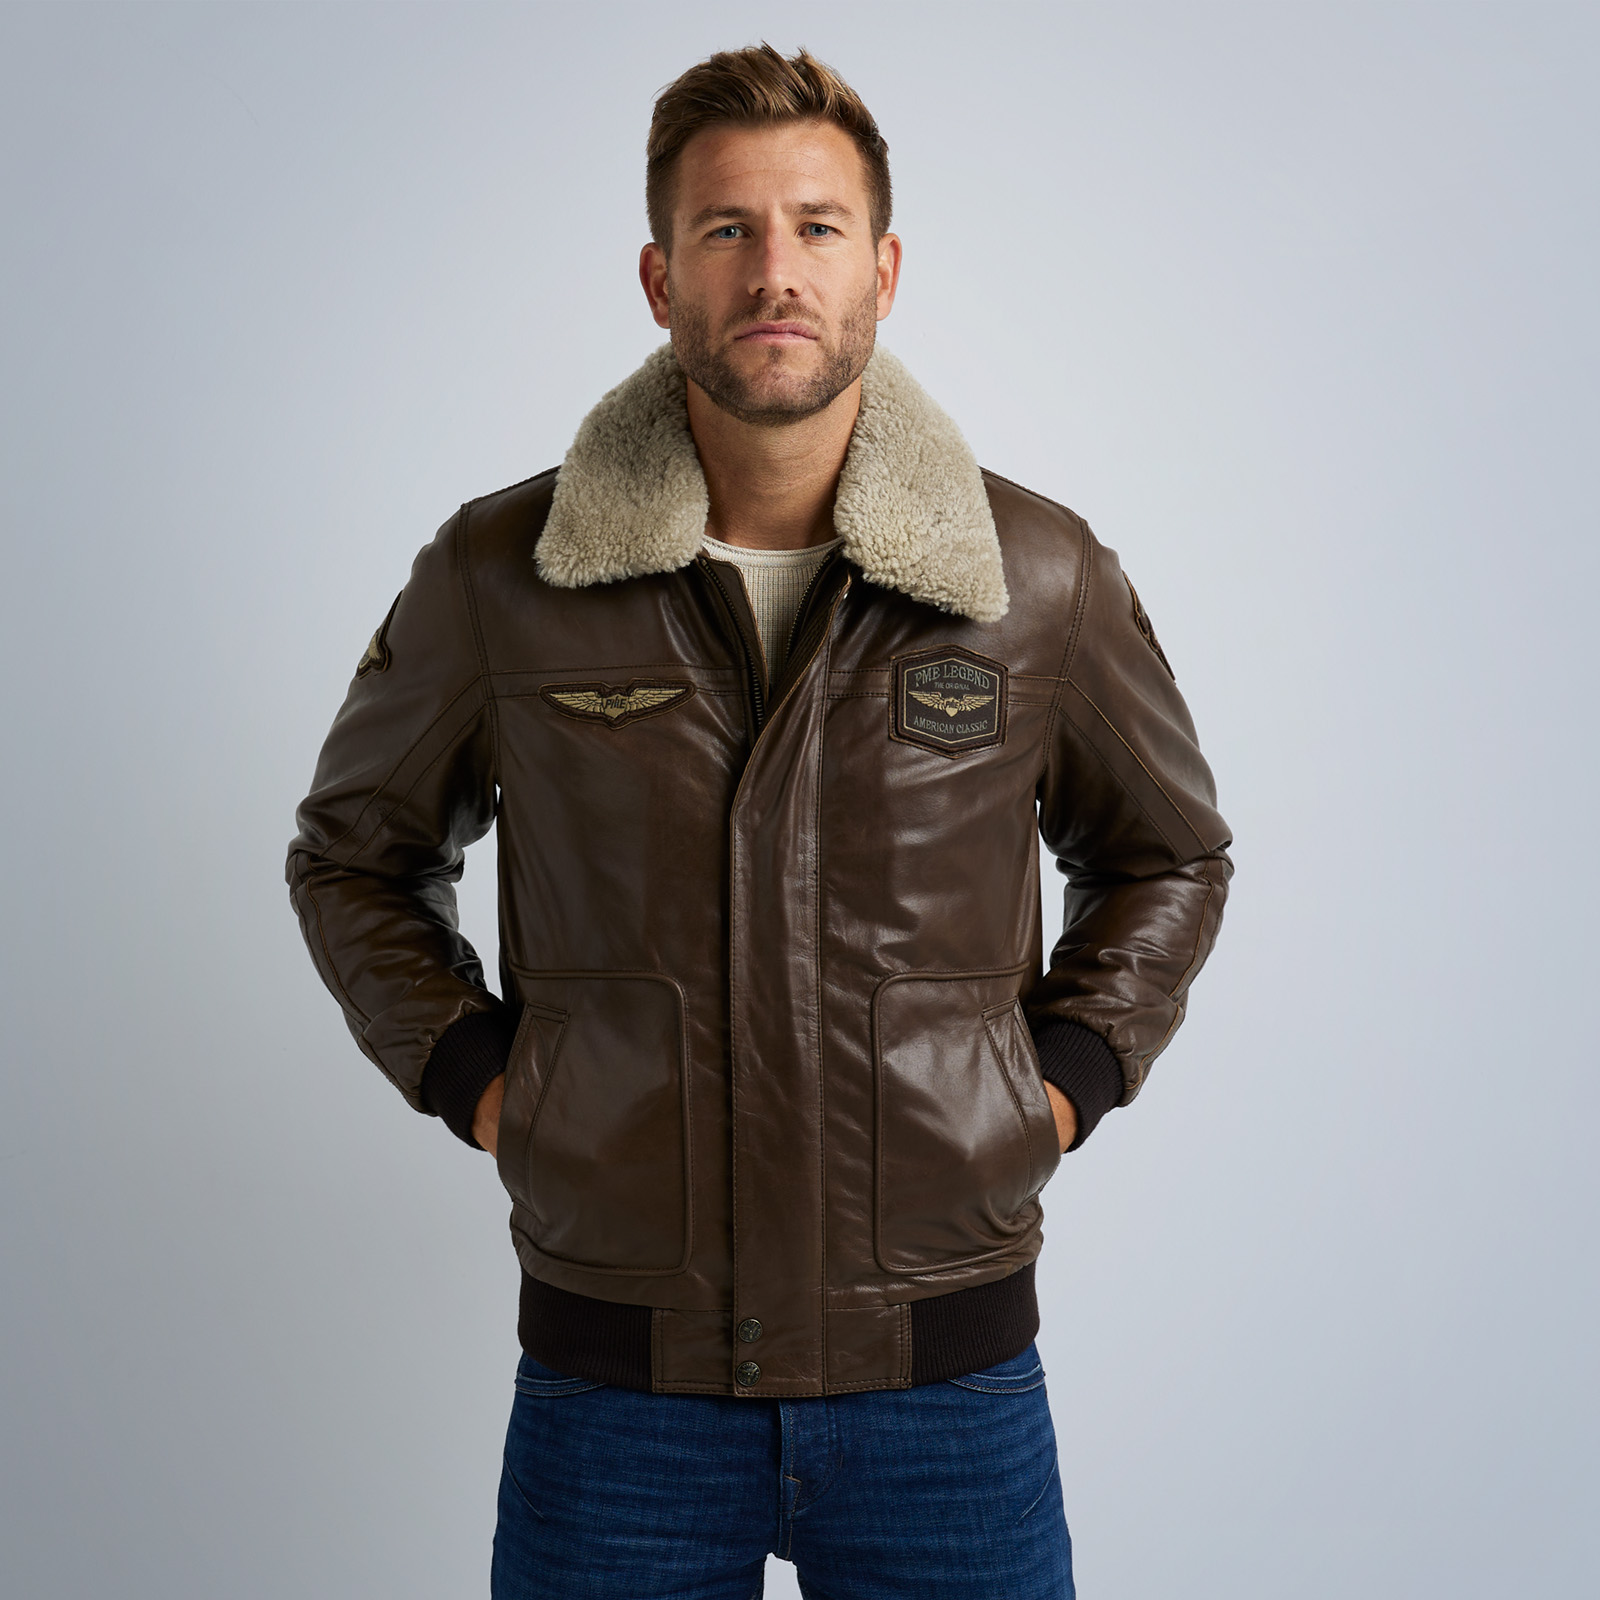 Meer Verfijnen strategie PME LEGEND | Hudson Leather Jacket | Free shipping and returns